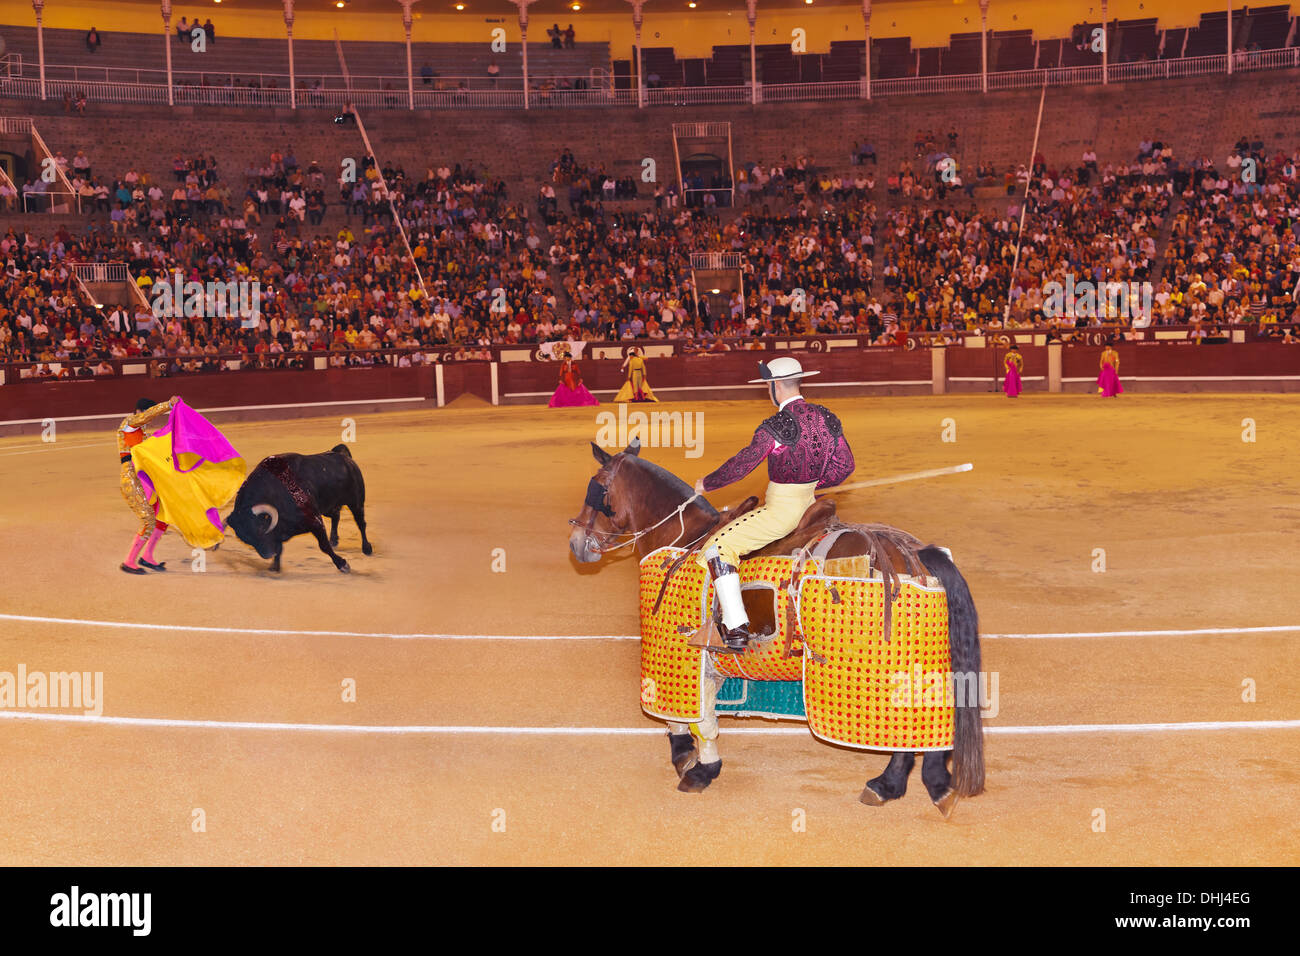 Matador and bull in bullfighting at Madrid Stock Photo